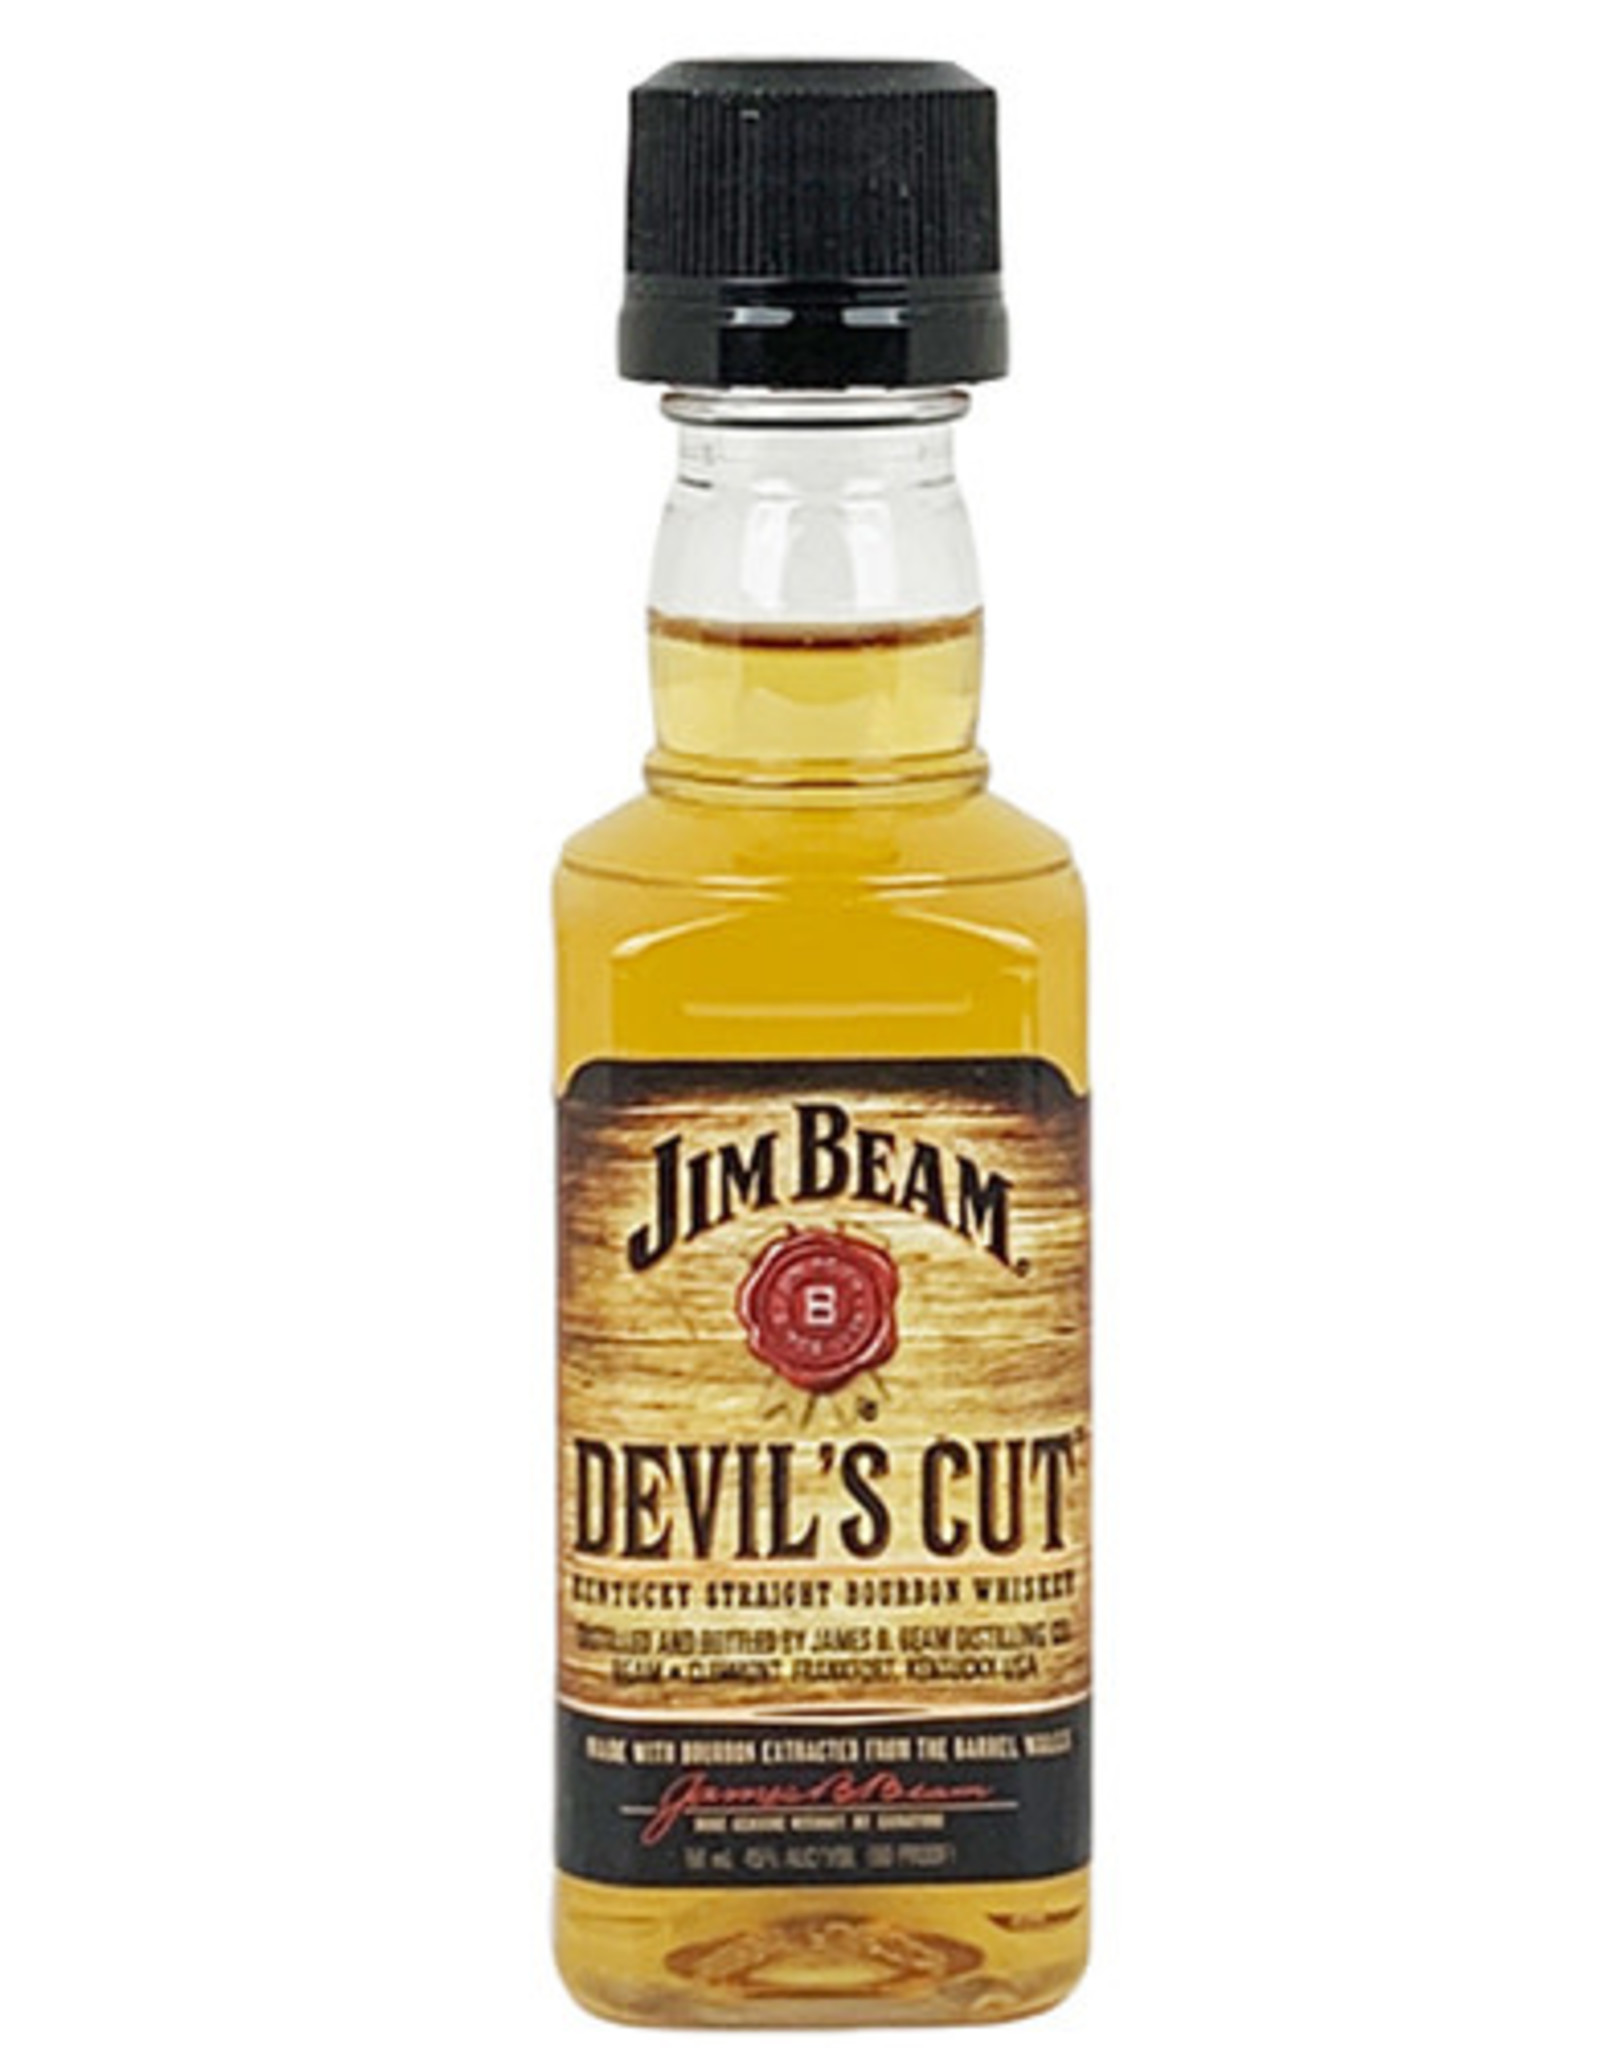 Jim Beam JIM BEAM - DEVIL'S CUT - BOURBON - 90 PR - 50 ML